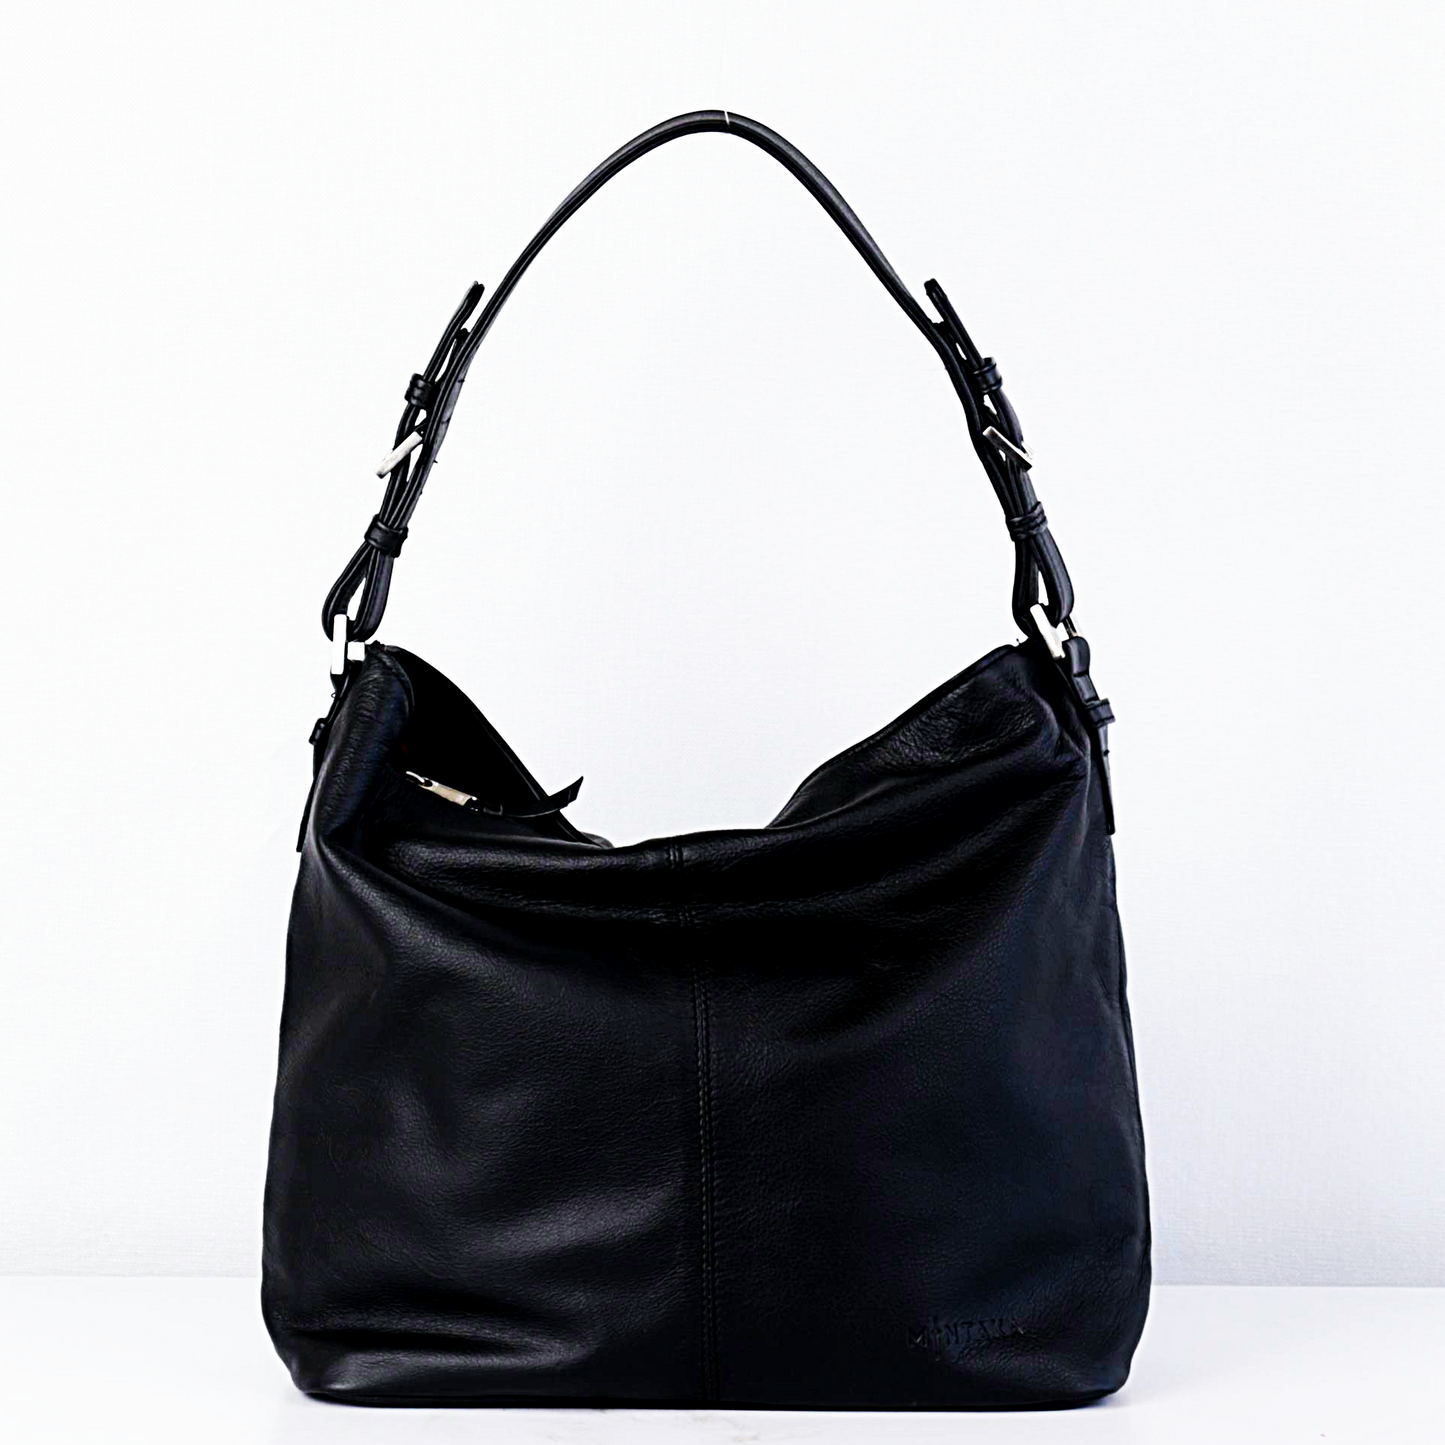 Olivia Hobo Leather Bag